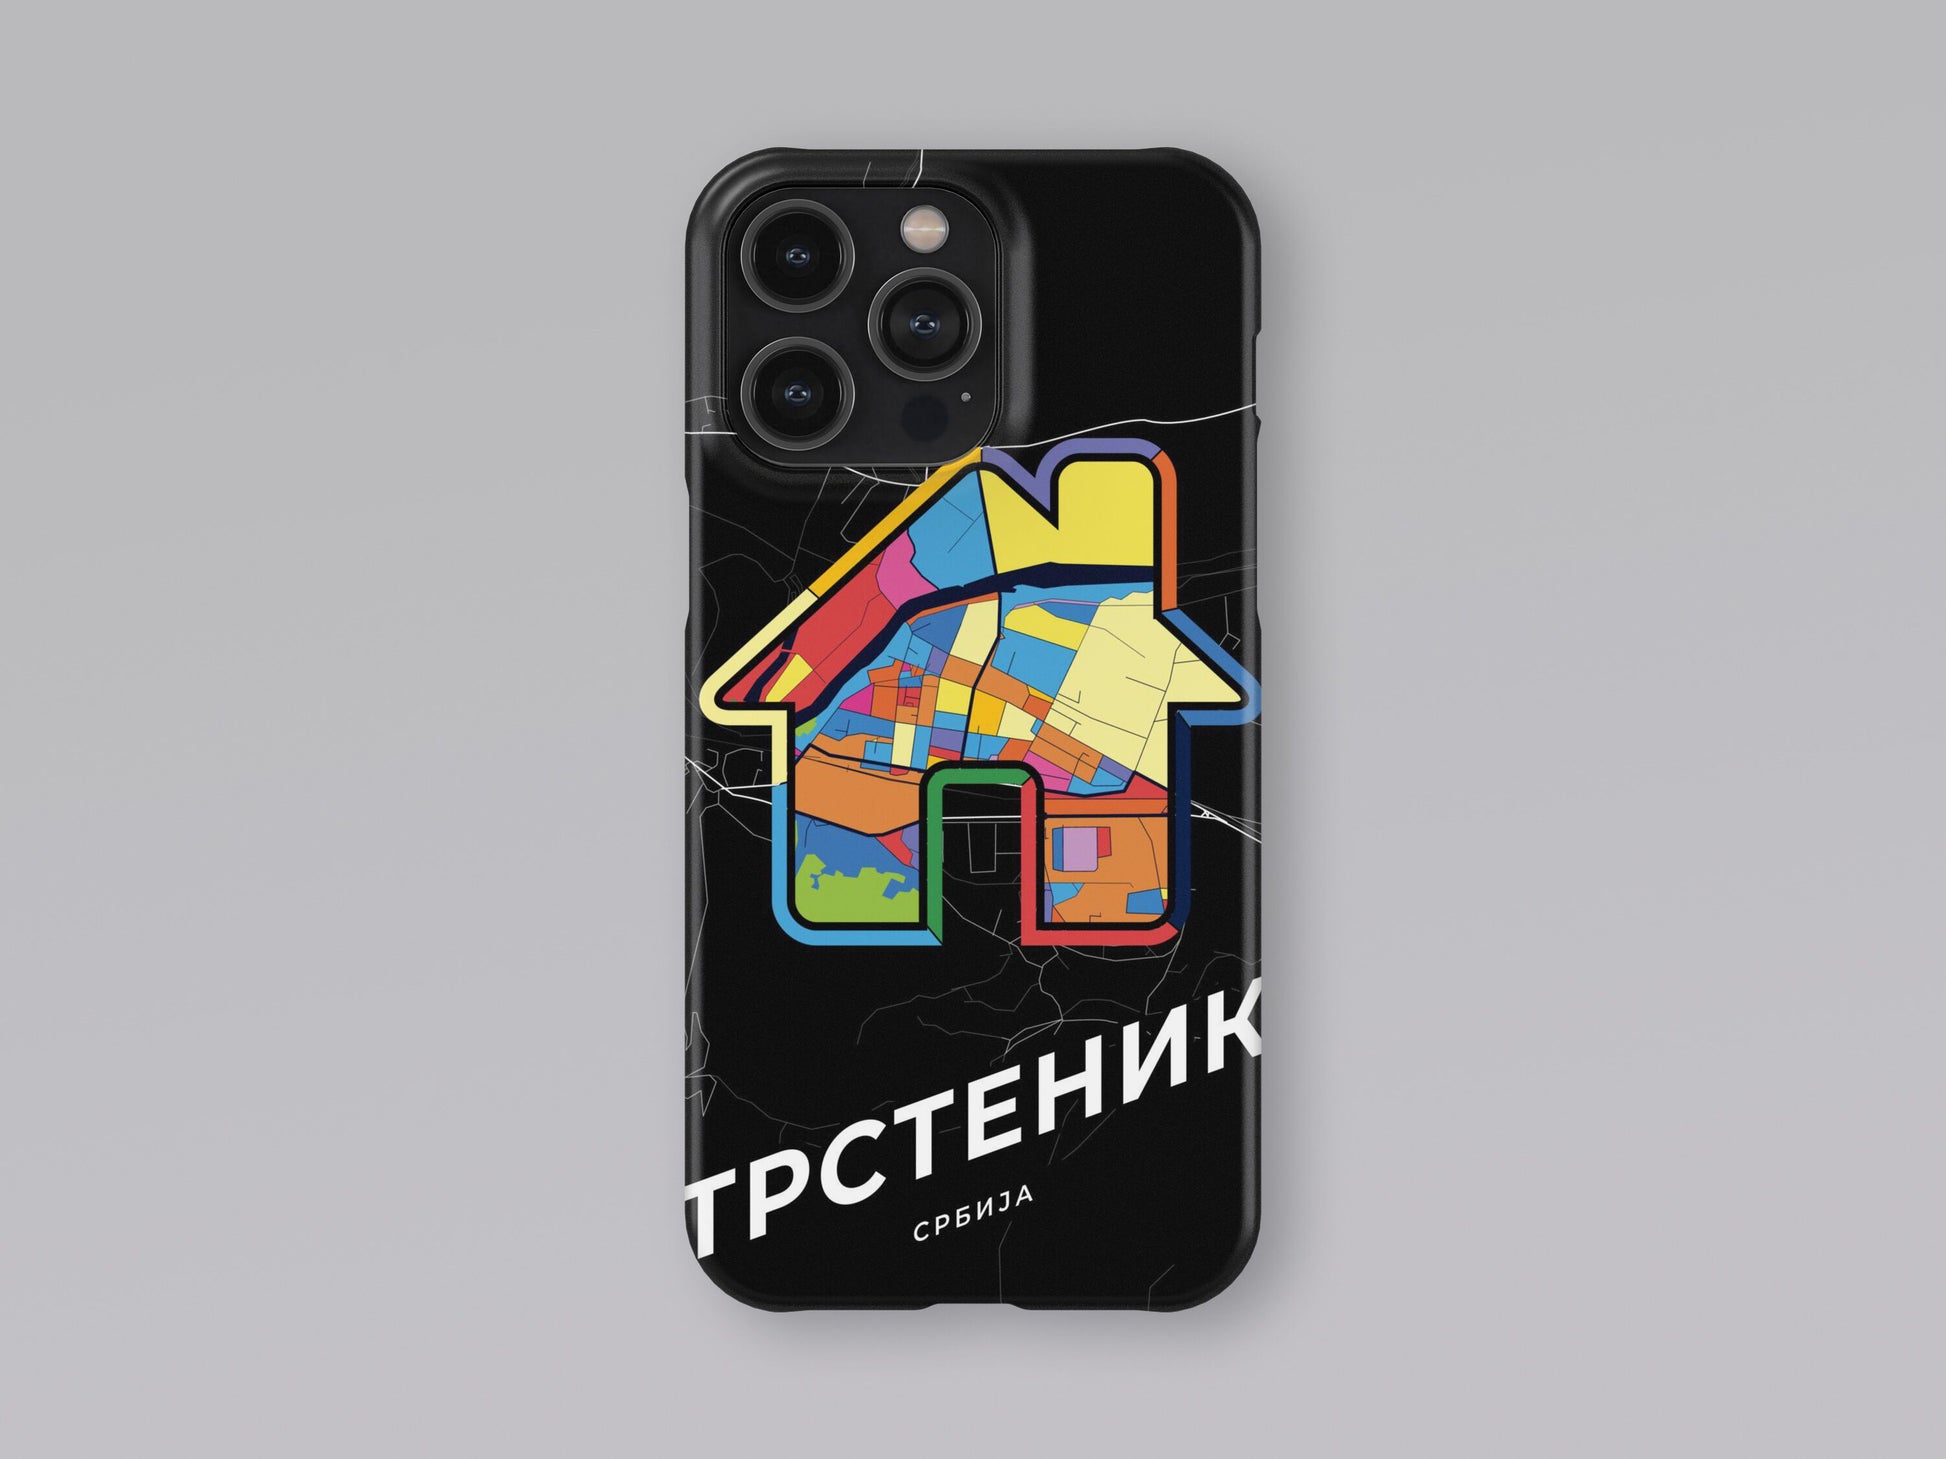 Trstenik Serbia slim phone case with colorful icon 3